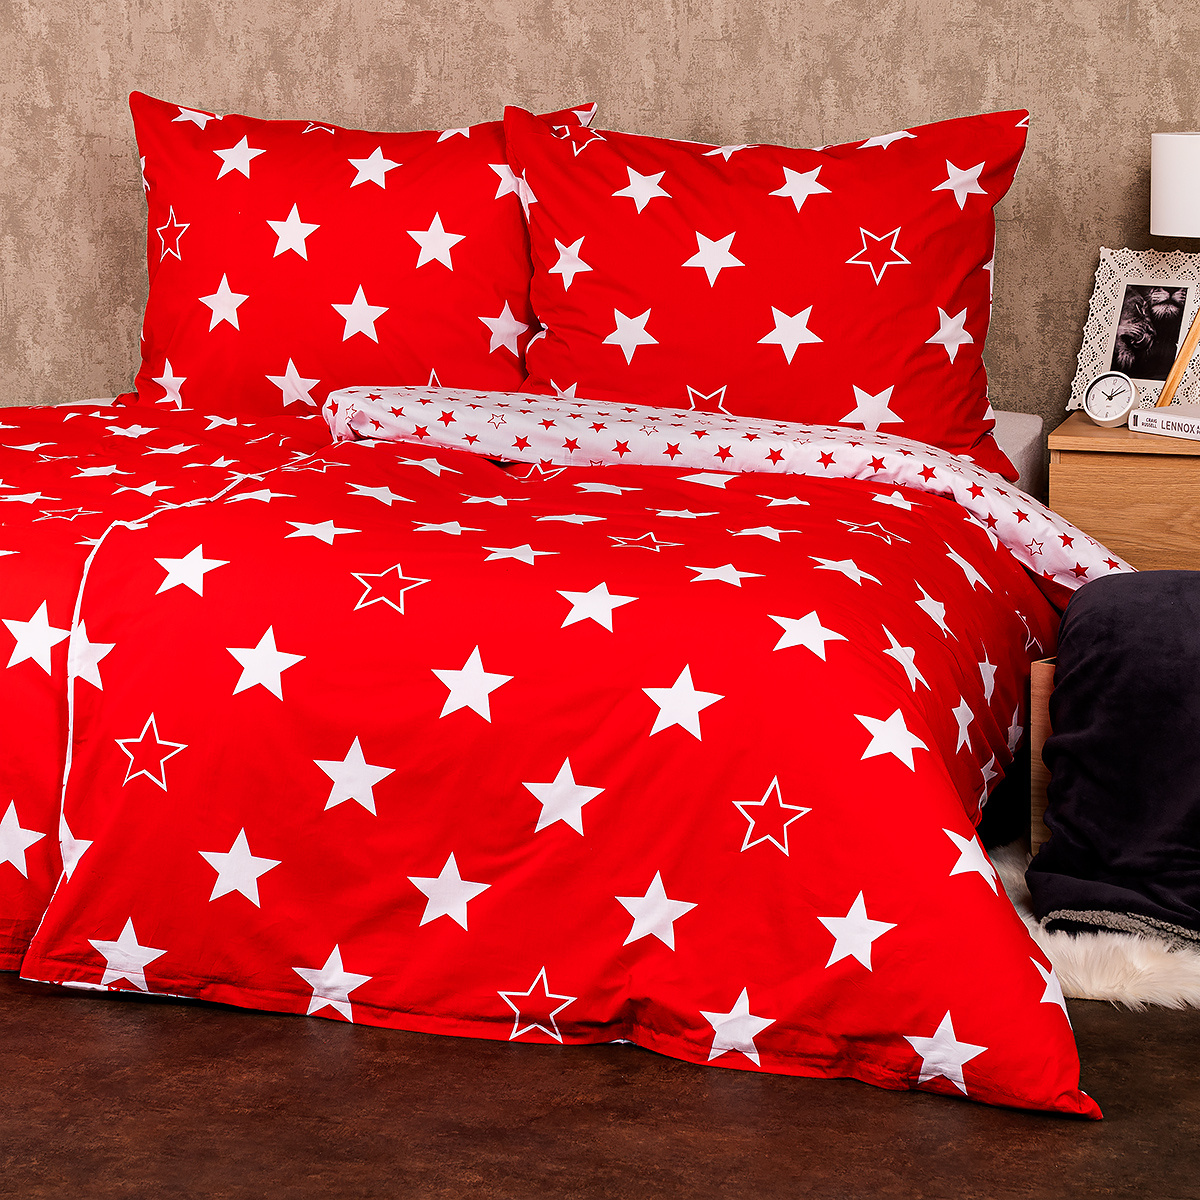 Lenjerie bumbac 4Home Stars red, 220 x 200 cm, 2 buc. 70 x 90 cm 200